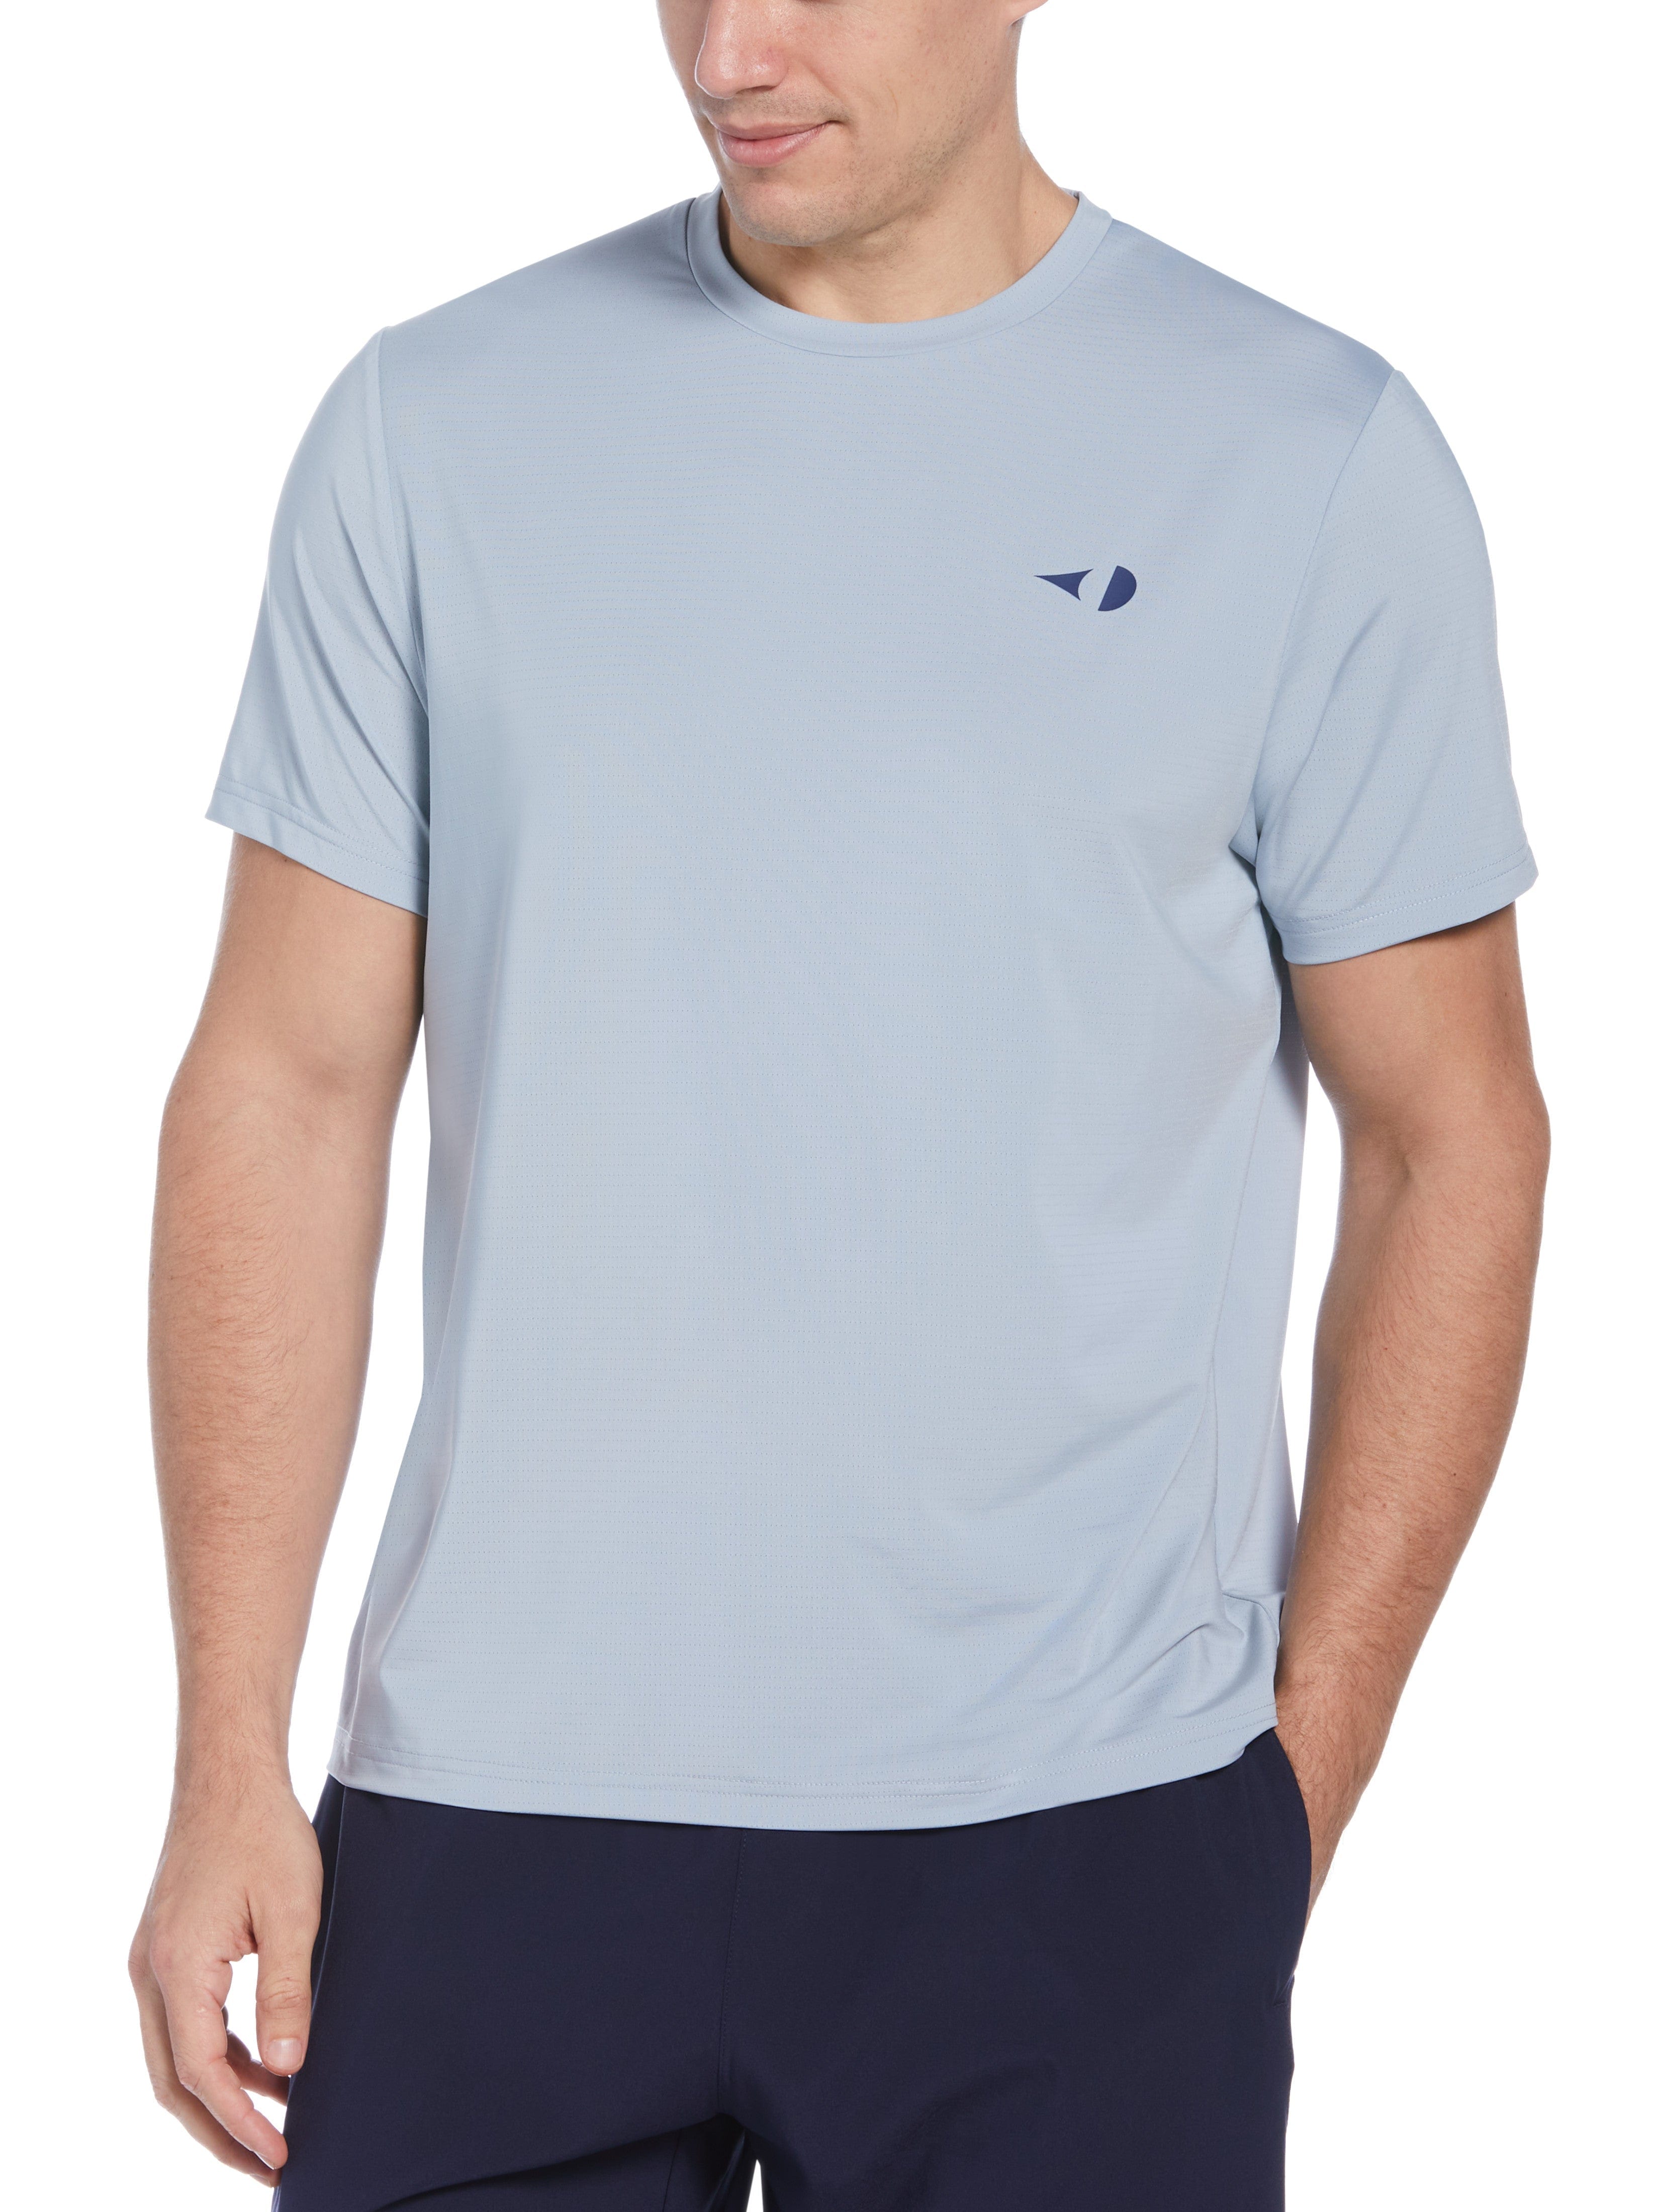 Grand Slam Mens Pin Hole Mesh Tennis T-Shirt, Size Medium, Blue Fog Gray, Polyester/Elastane | Golf Apparel Shop